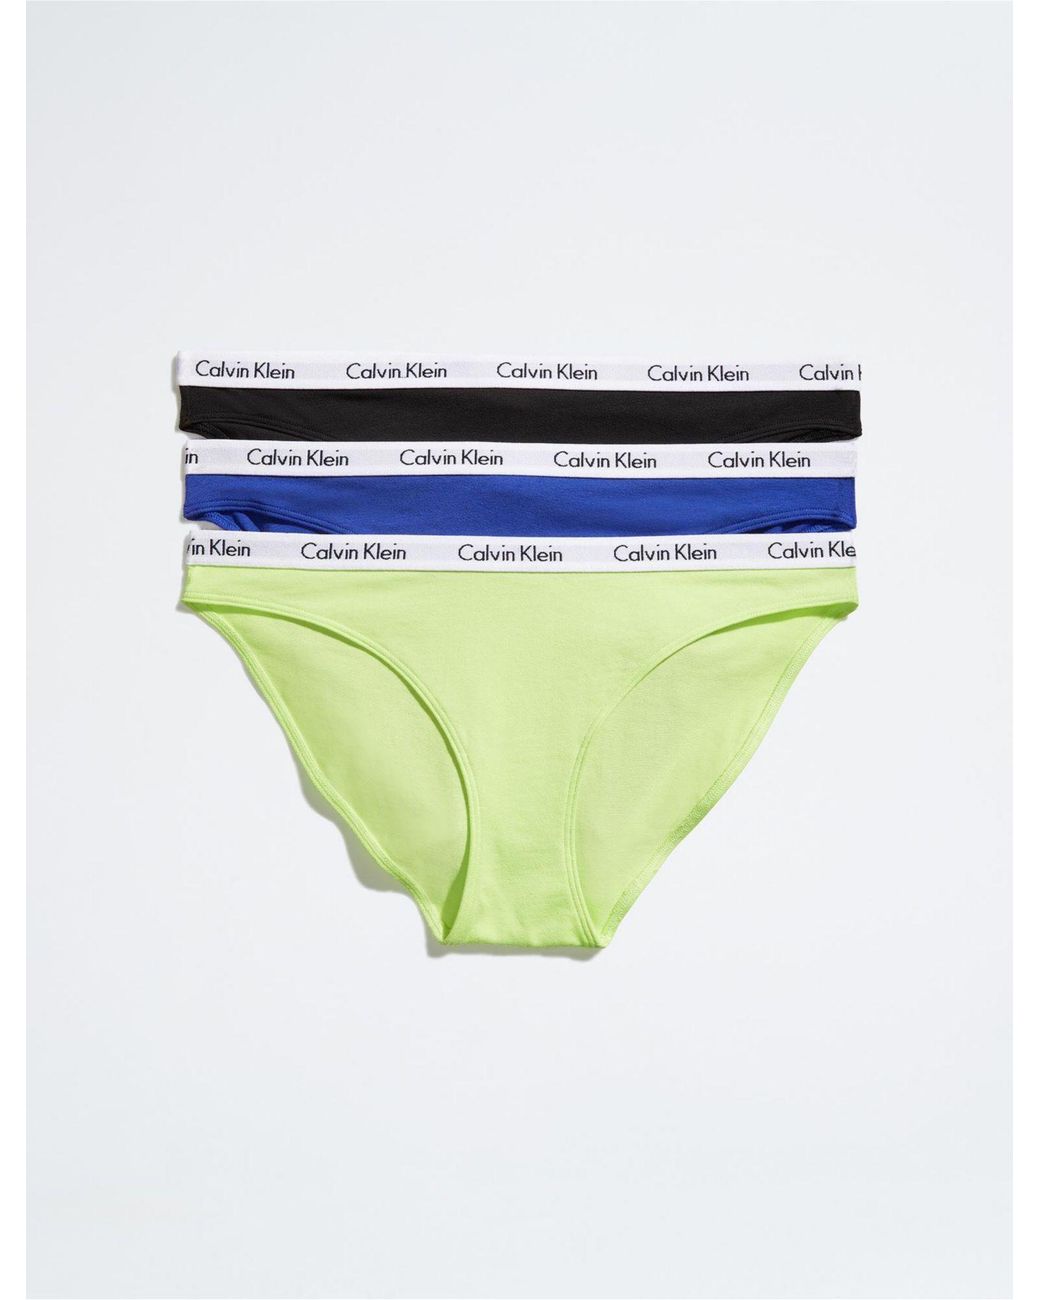 Calvin Klein Carousel 3-pack Bikini in Blue